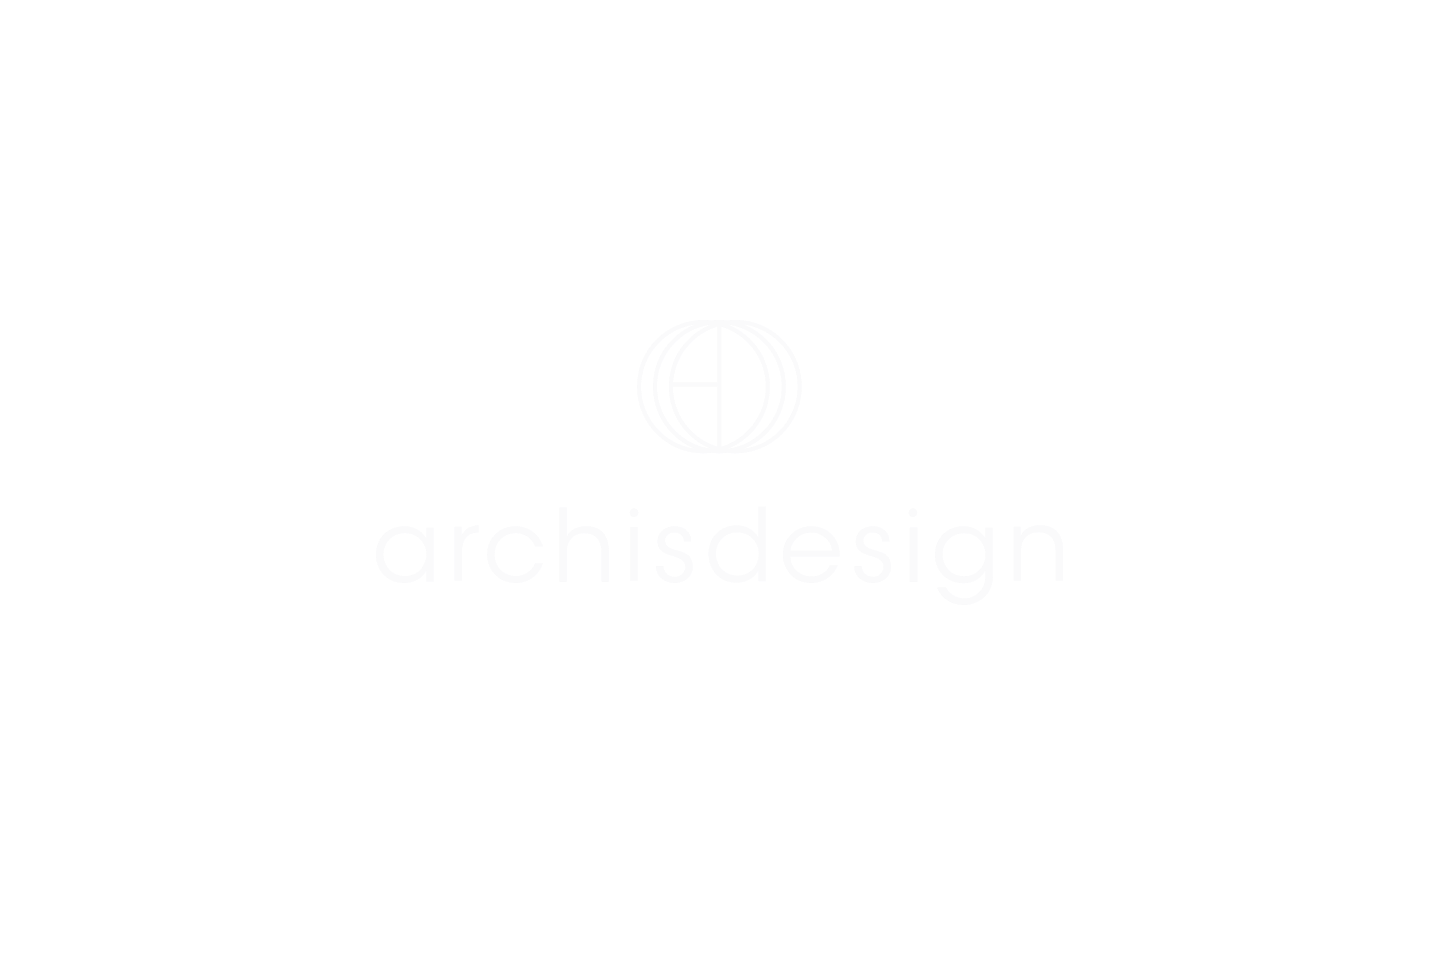 archisdesign-logo2